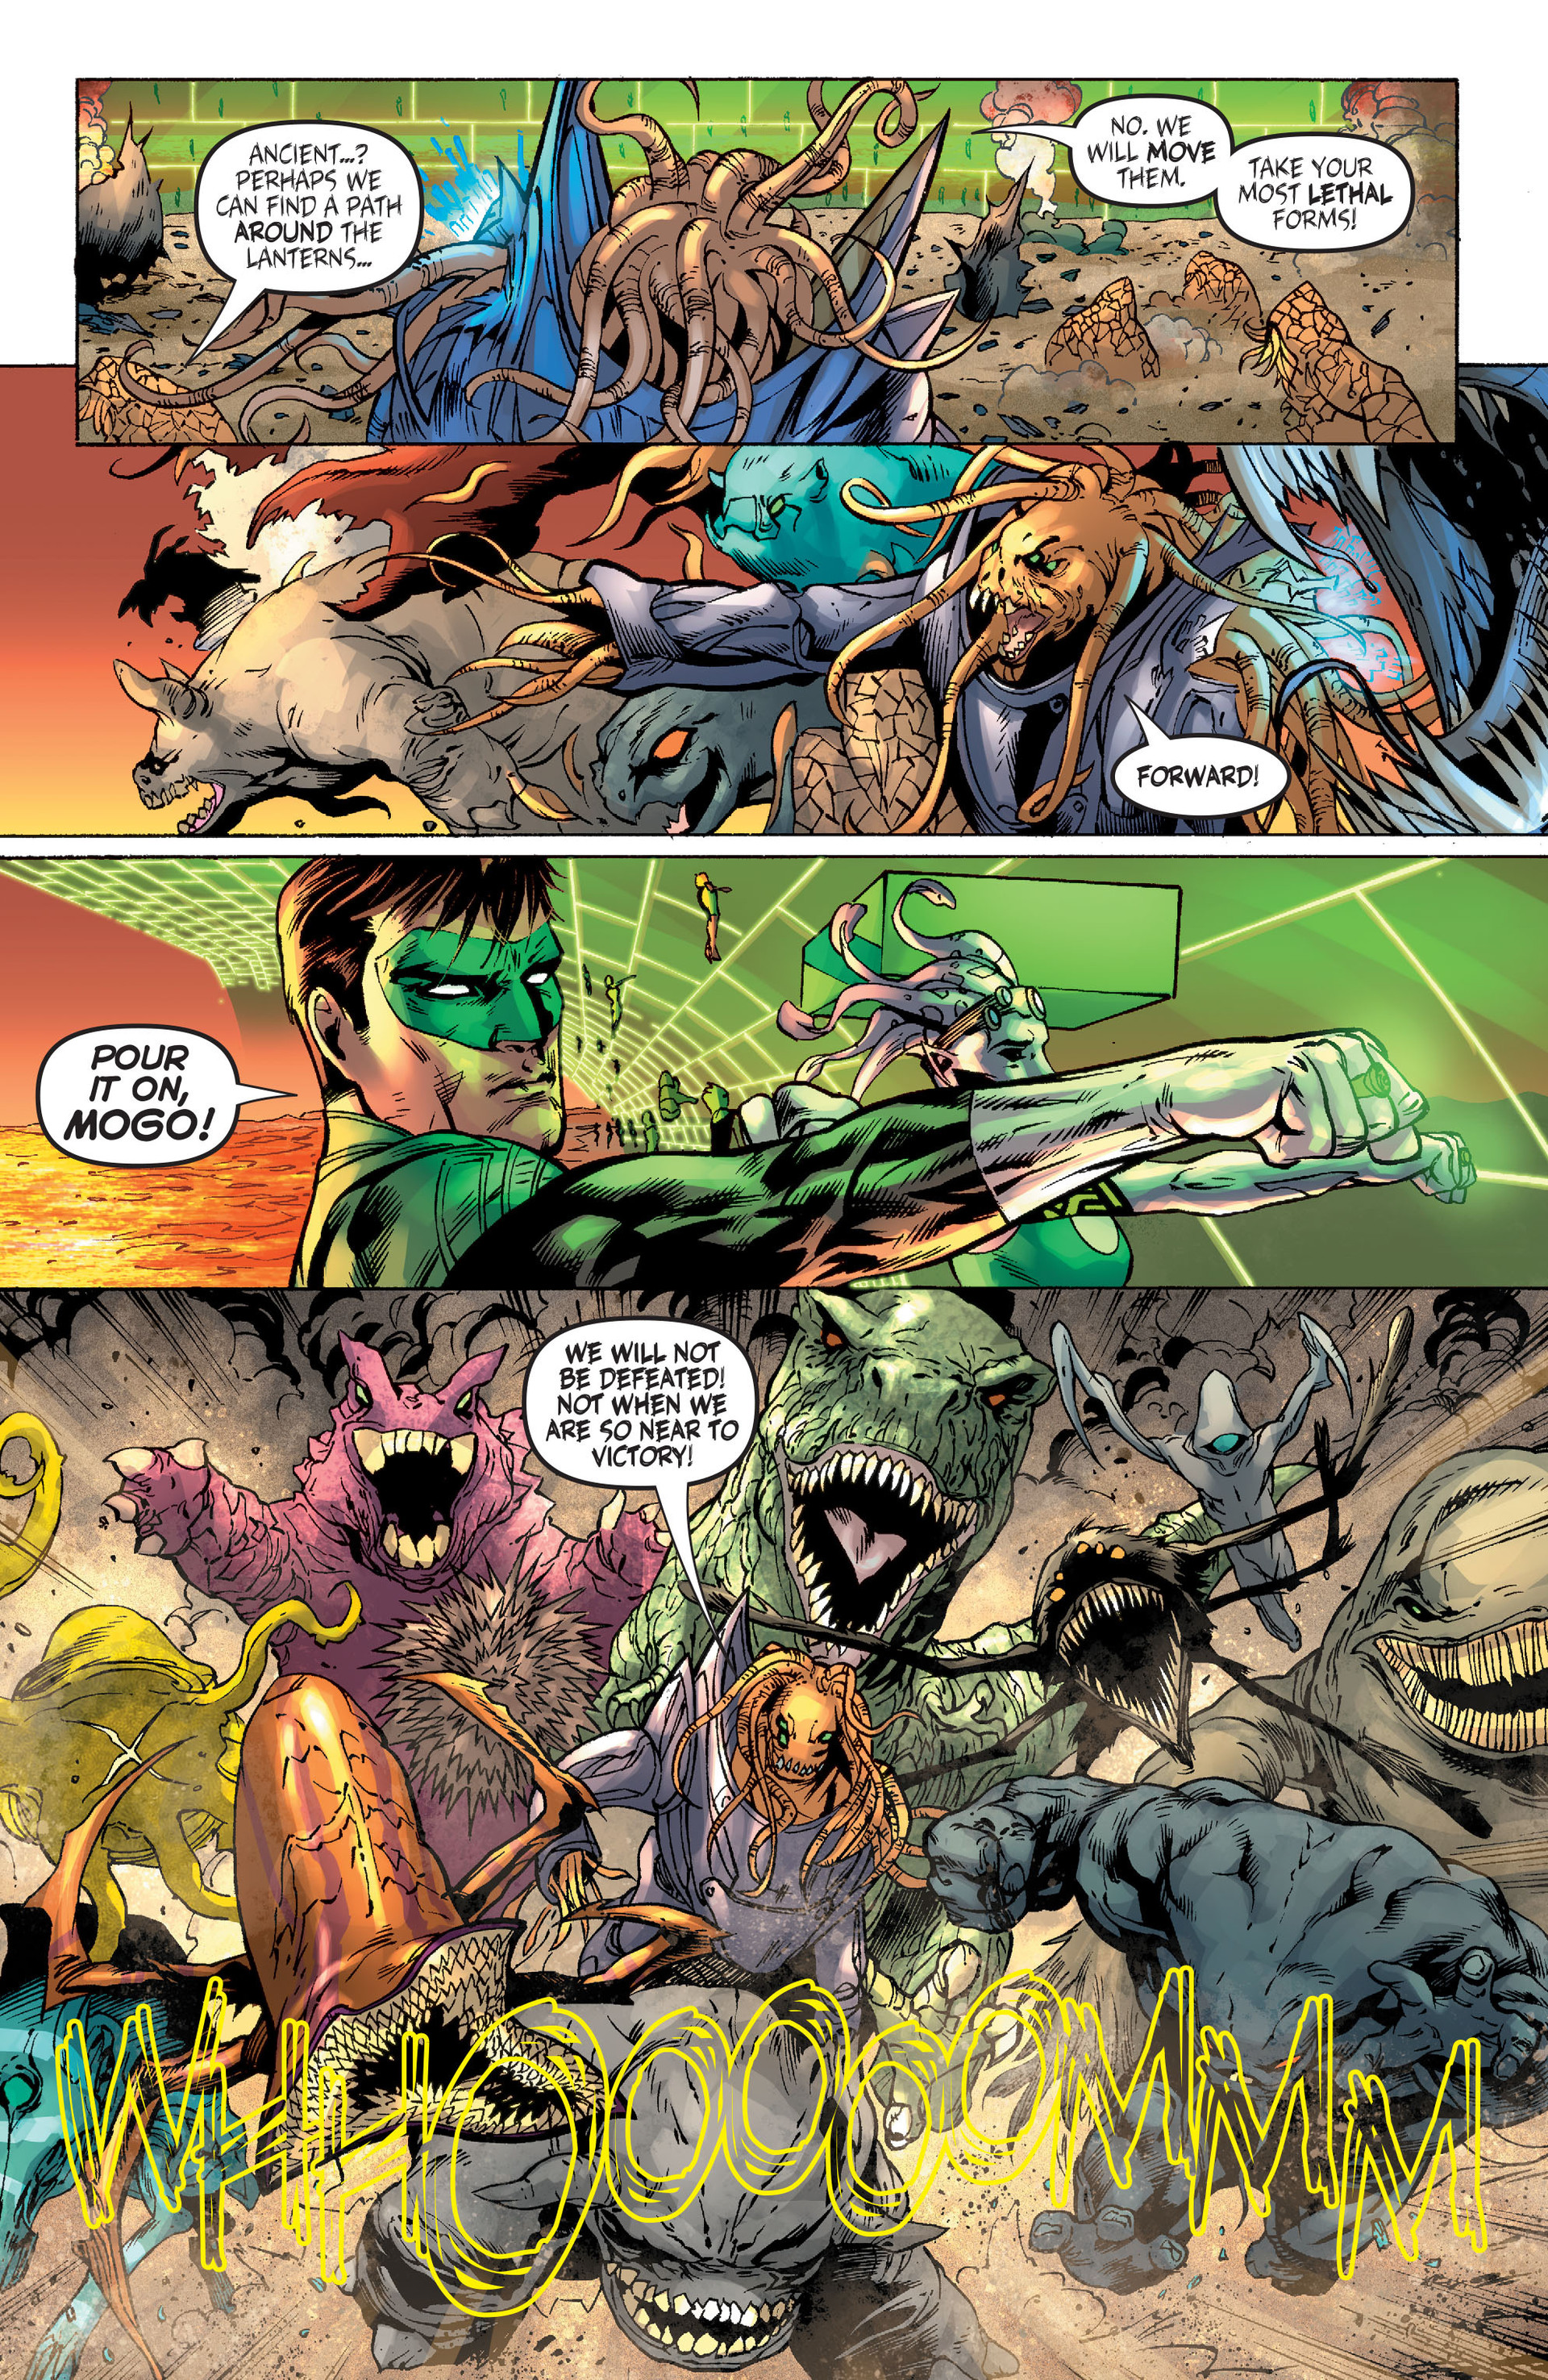 Green Lantern 2011 Issue 33 Read Green Lantern 2011 Issue 33 Comic